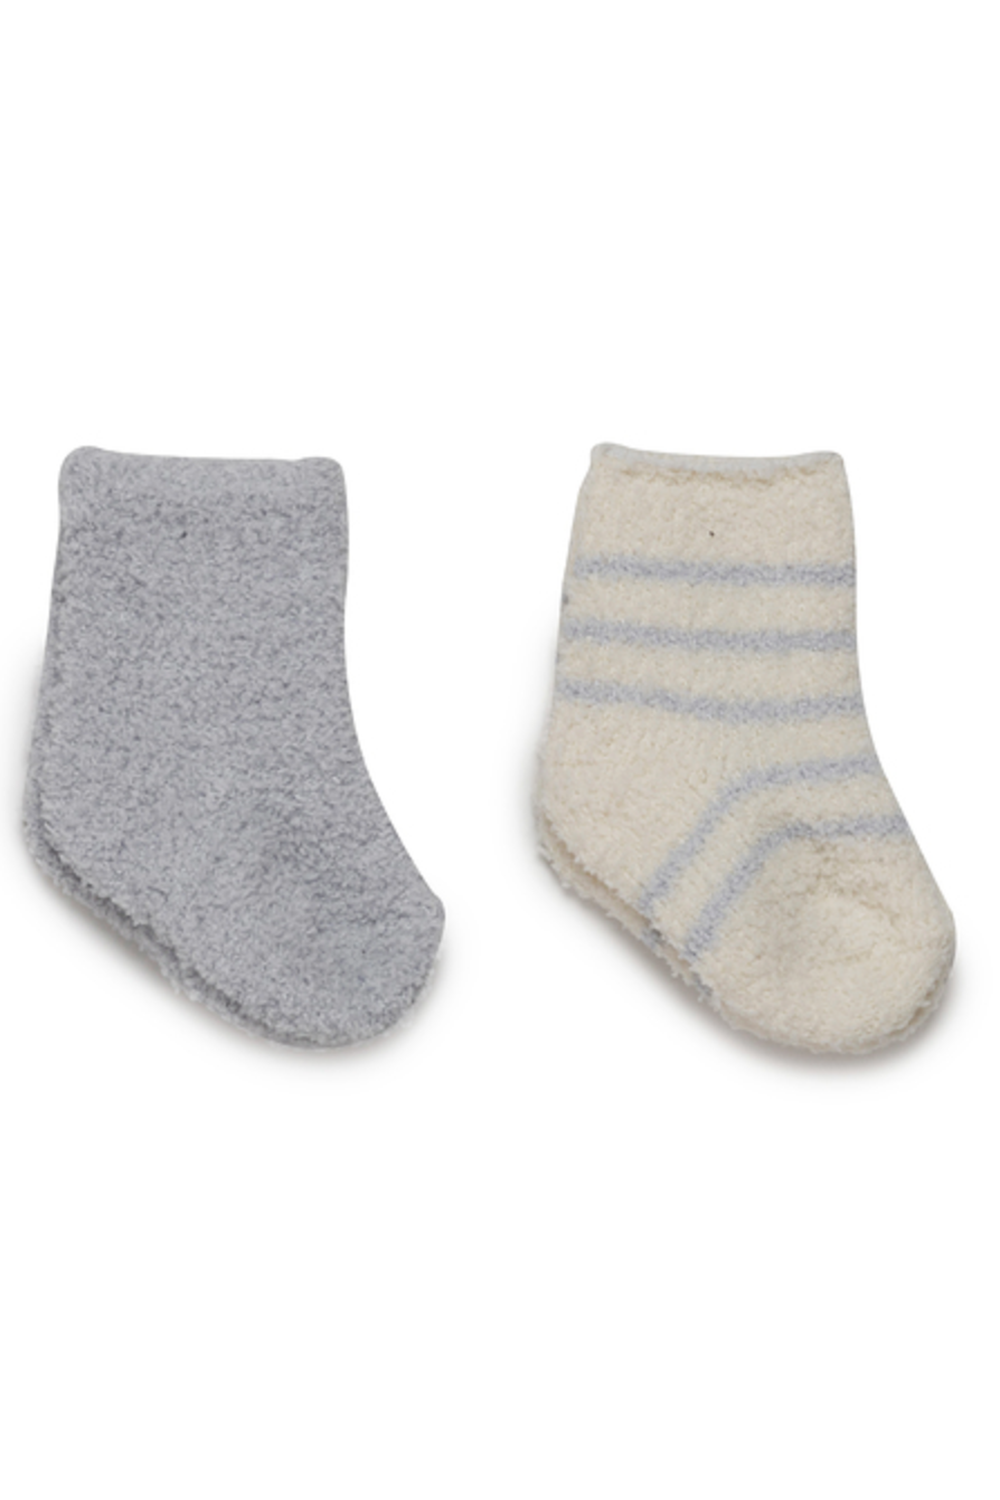 Cozy Chic Infant Sock Set of 2 - Blue